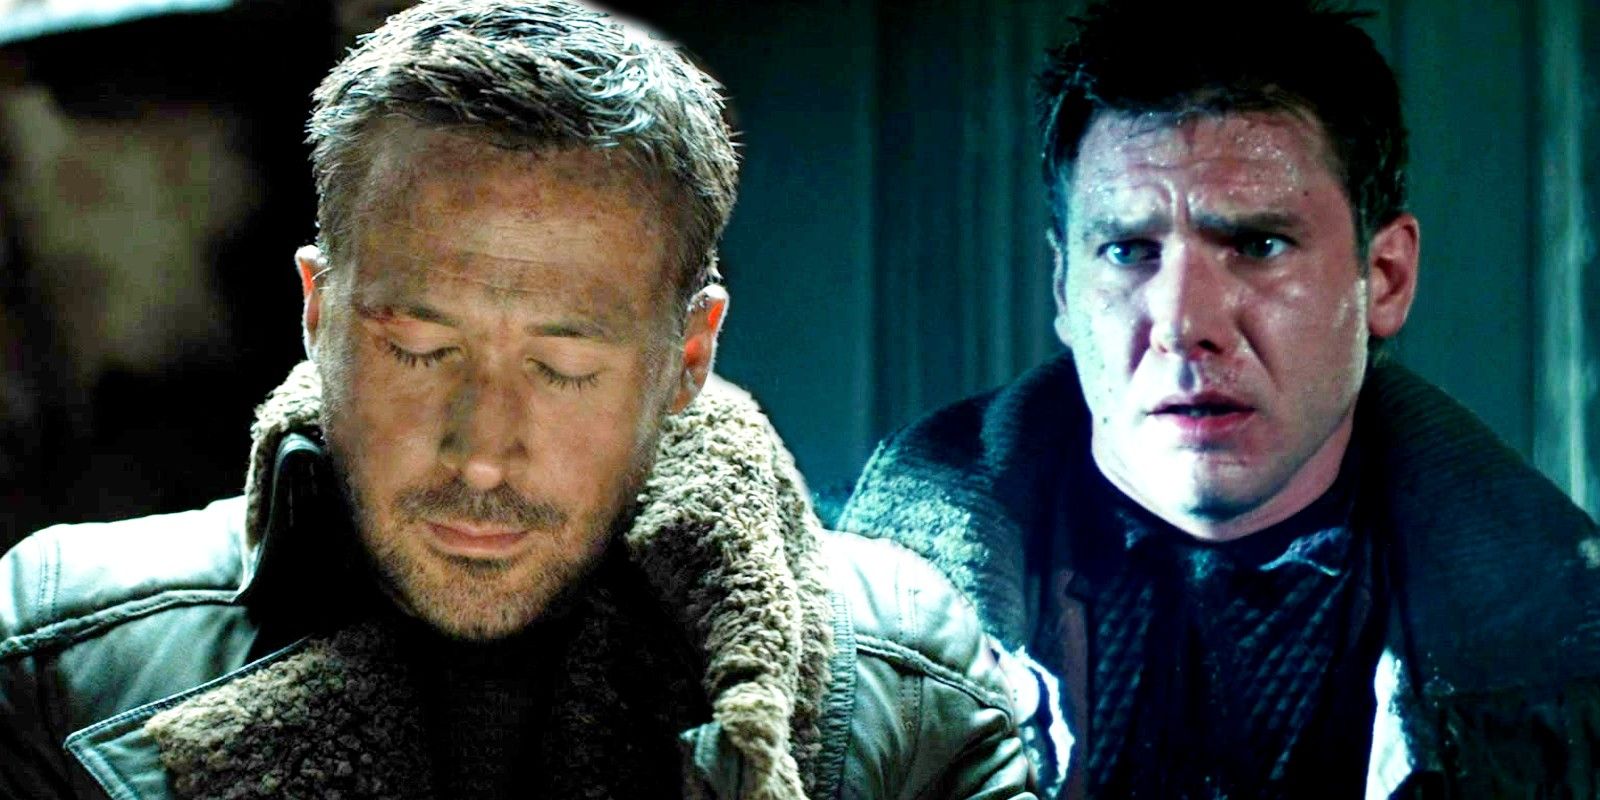 Blended image of K looking down in Blade Runner 2049 and Deckard looking confused in Blade Runner